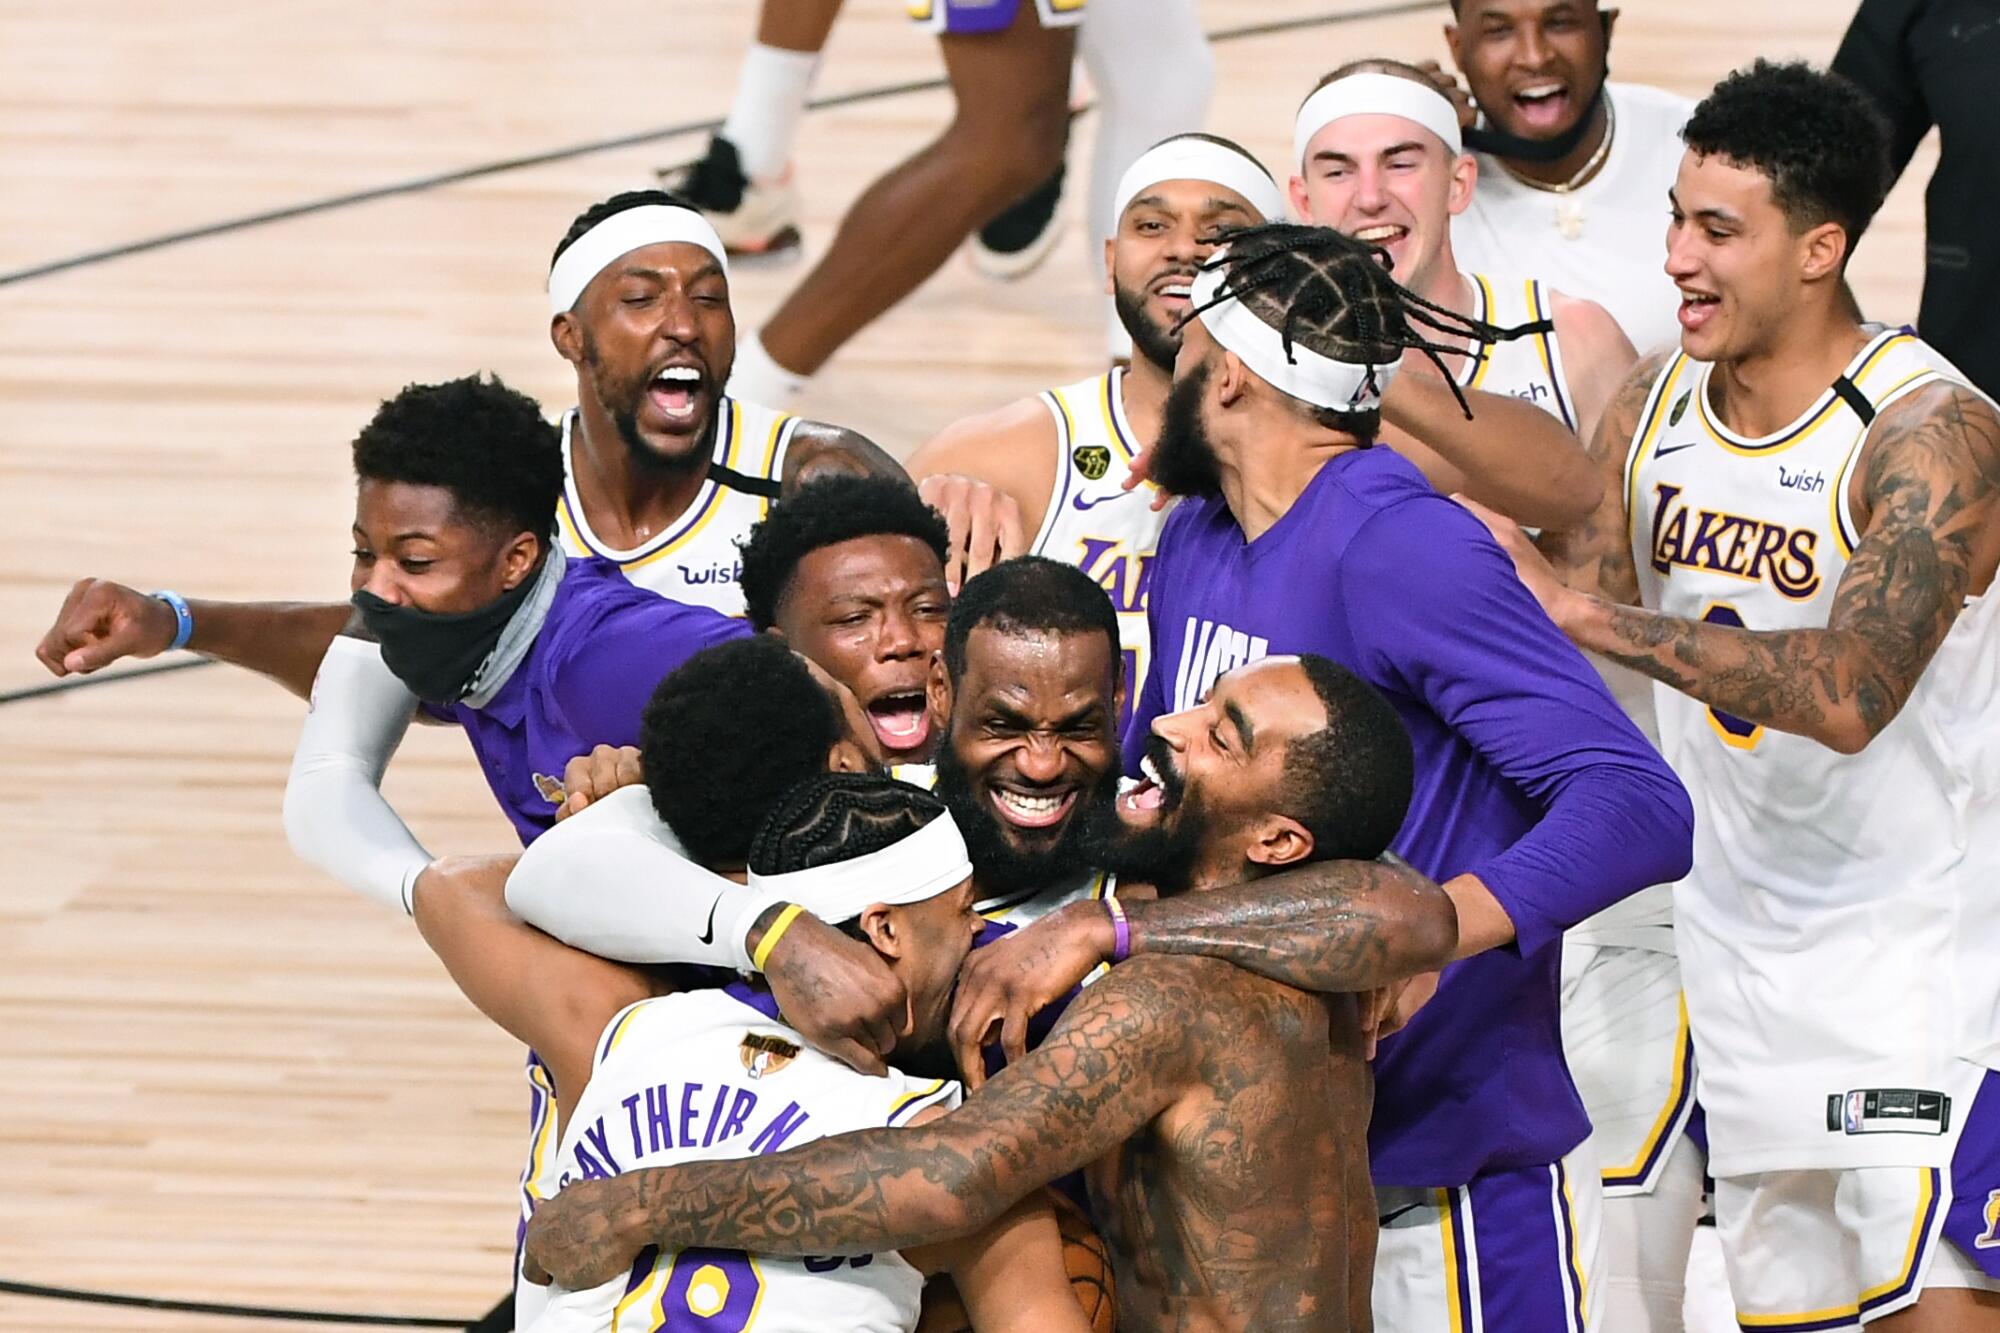 Laker players, including LeBron James, celebrate winning the NBA championship.